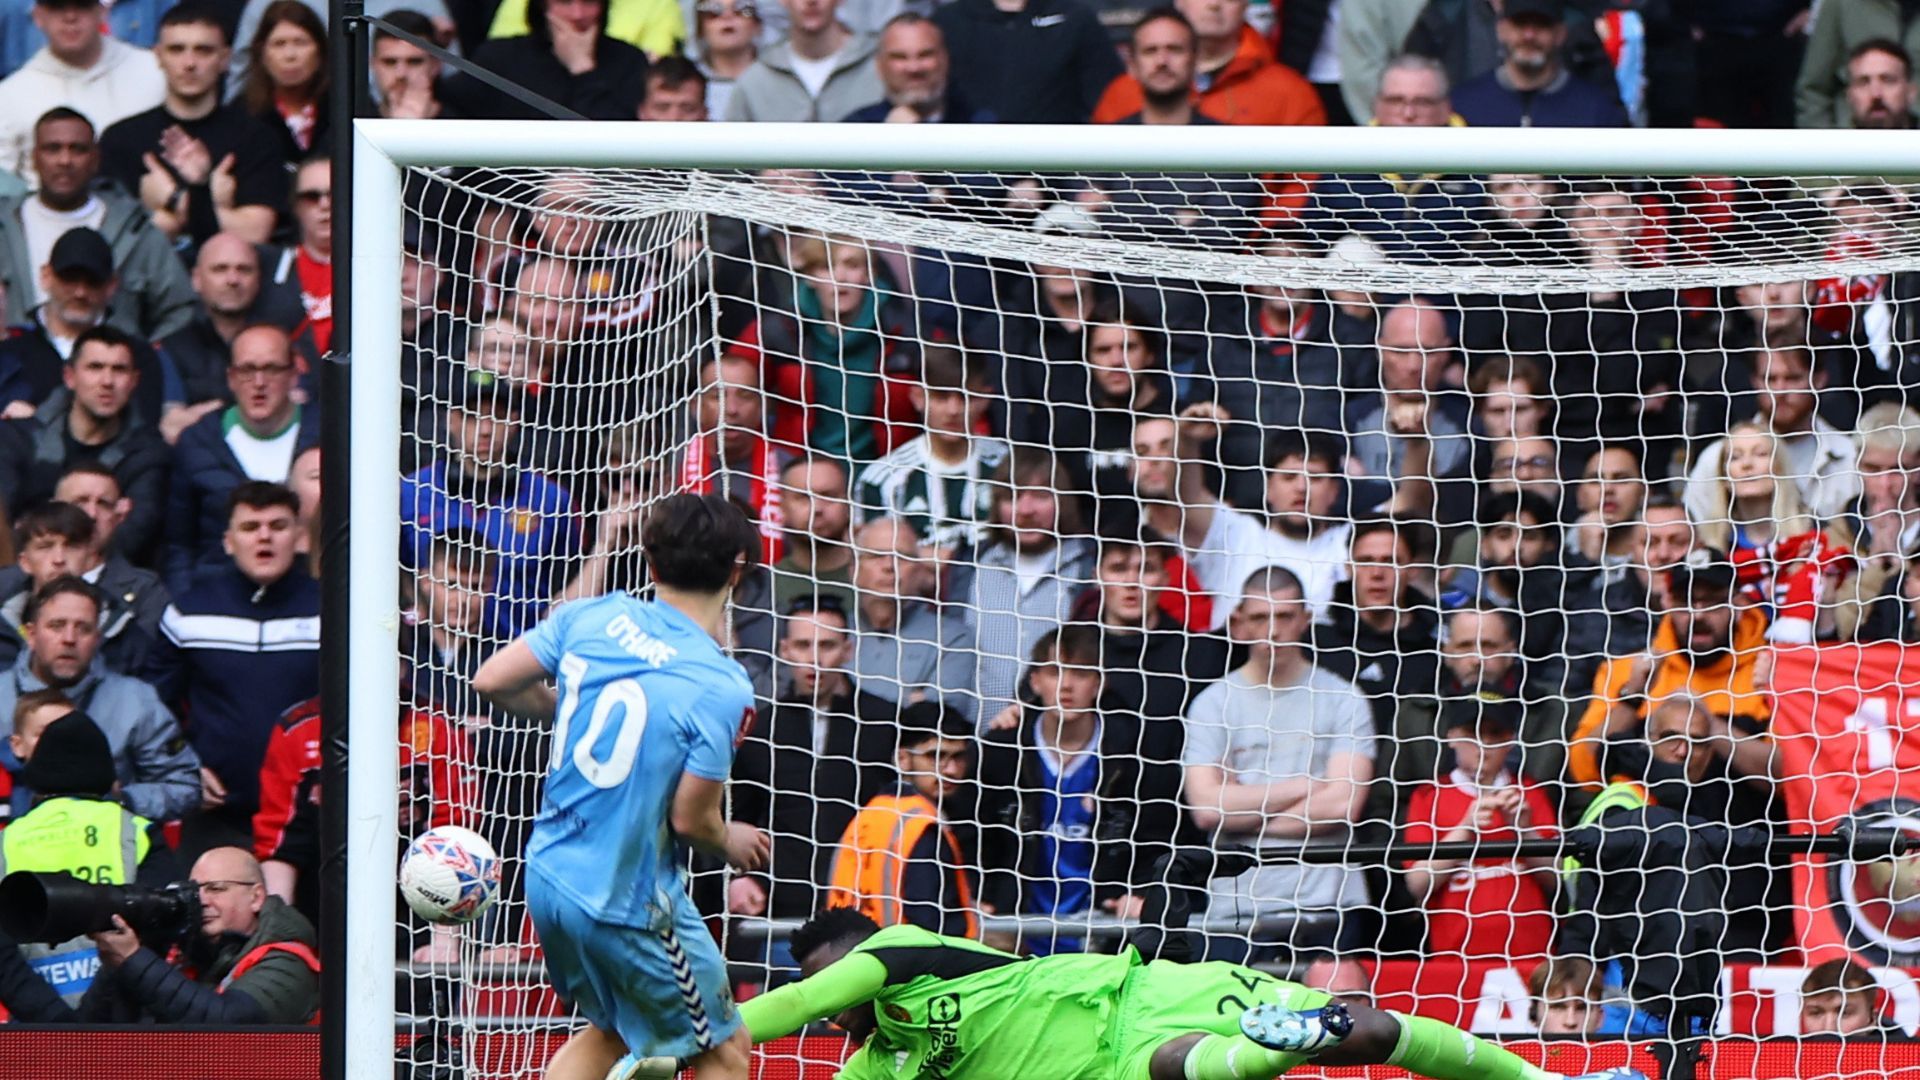 Callum O'Hare FA Cup penalty miss vs Manchester United